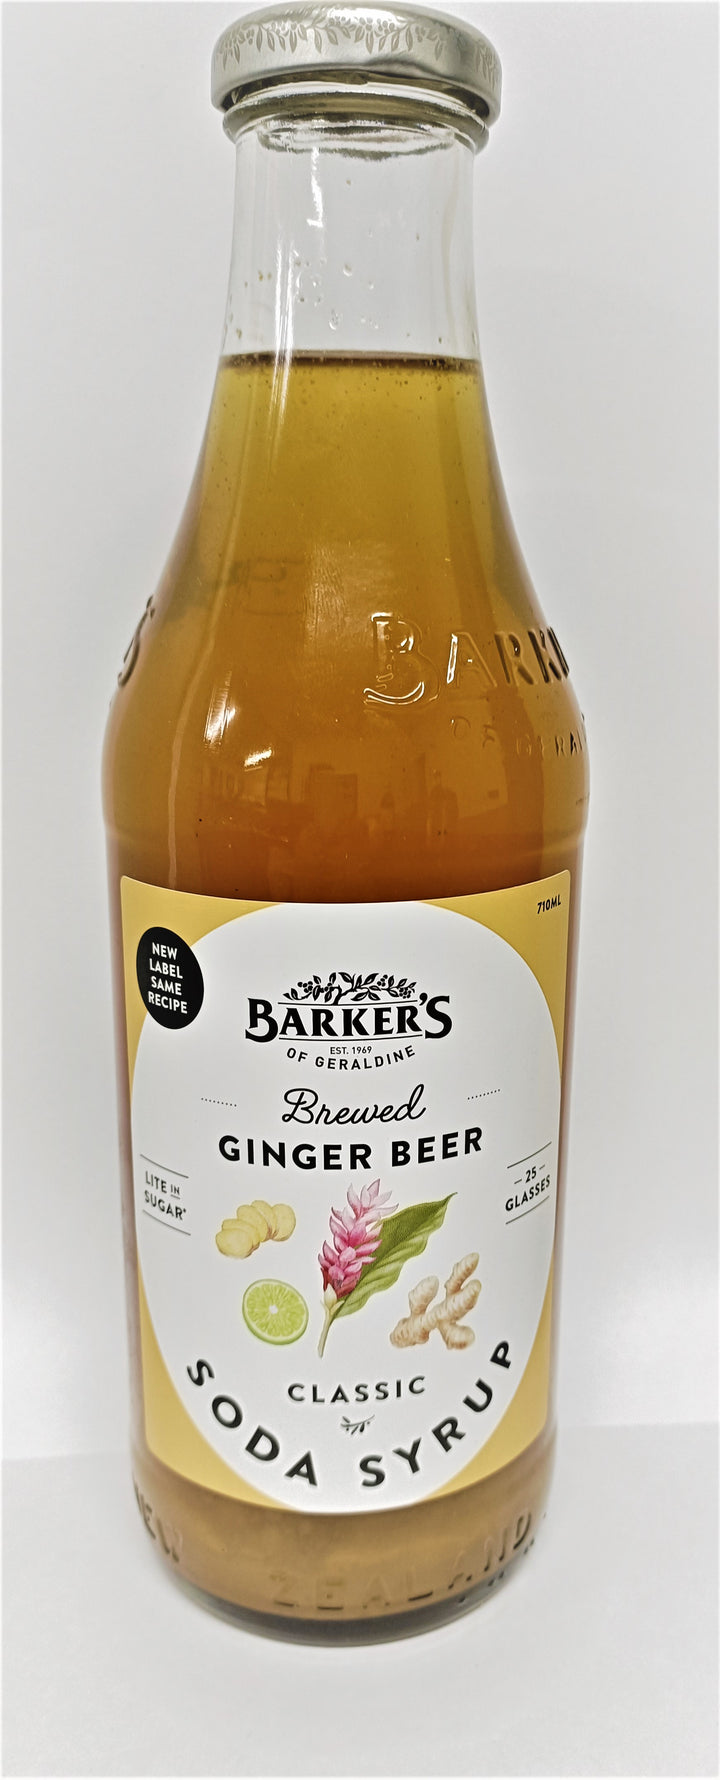 Ginger Beer - WilliamsWarn